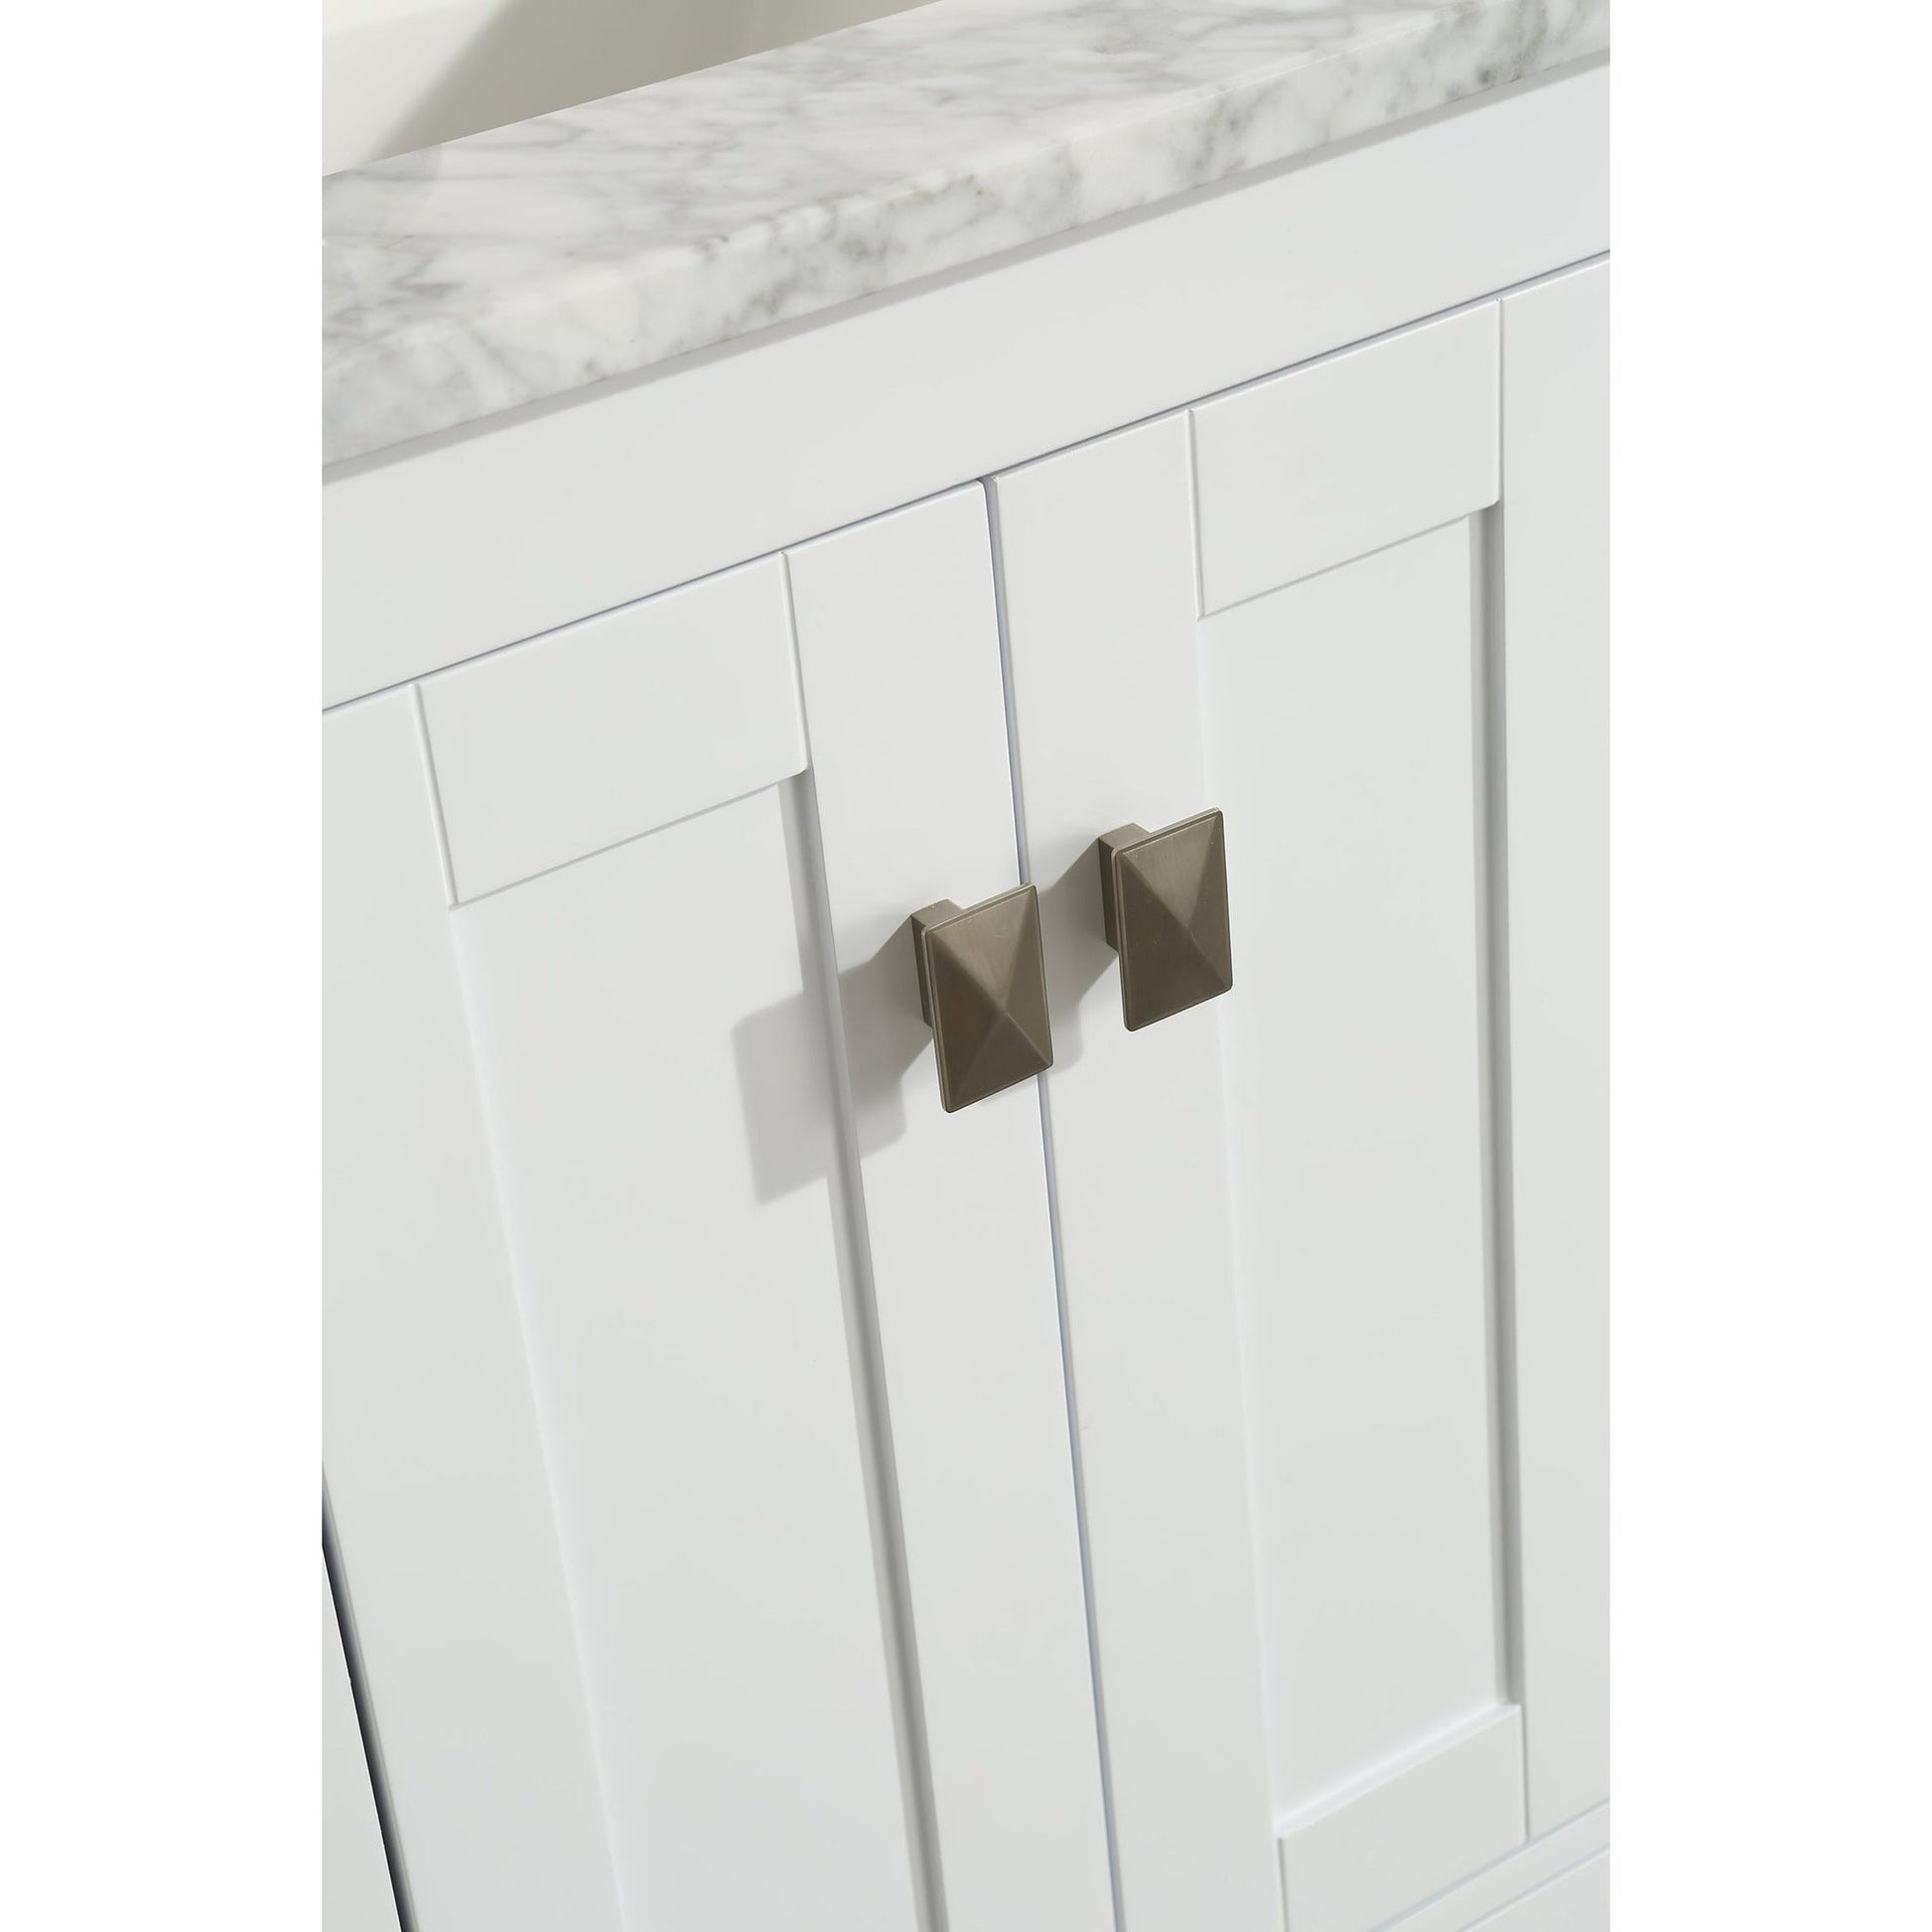 Eviva London 20" x 34" White Freestanding Bathroom Vanity With Carrara Marble Countertop and Single Undermount Sink